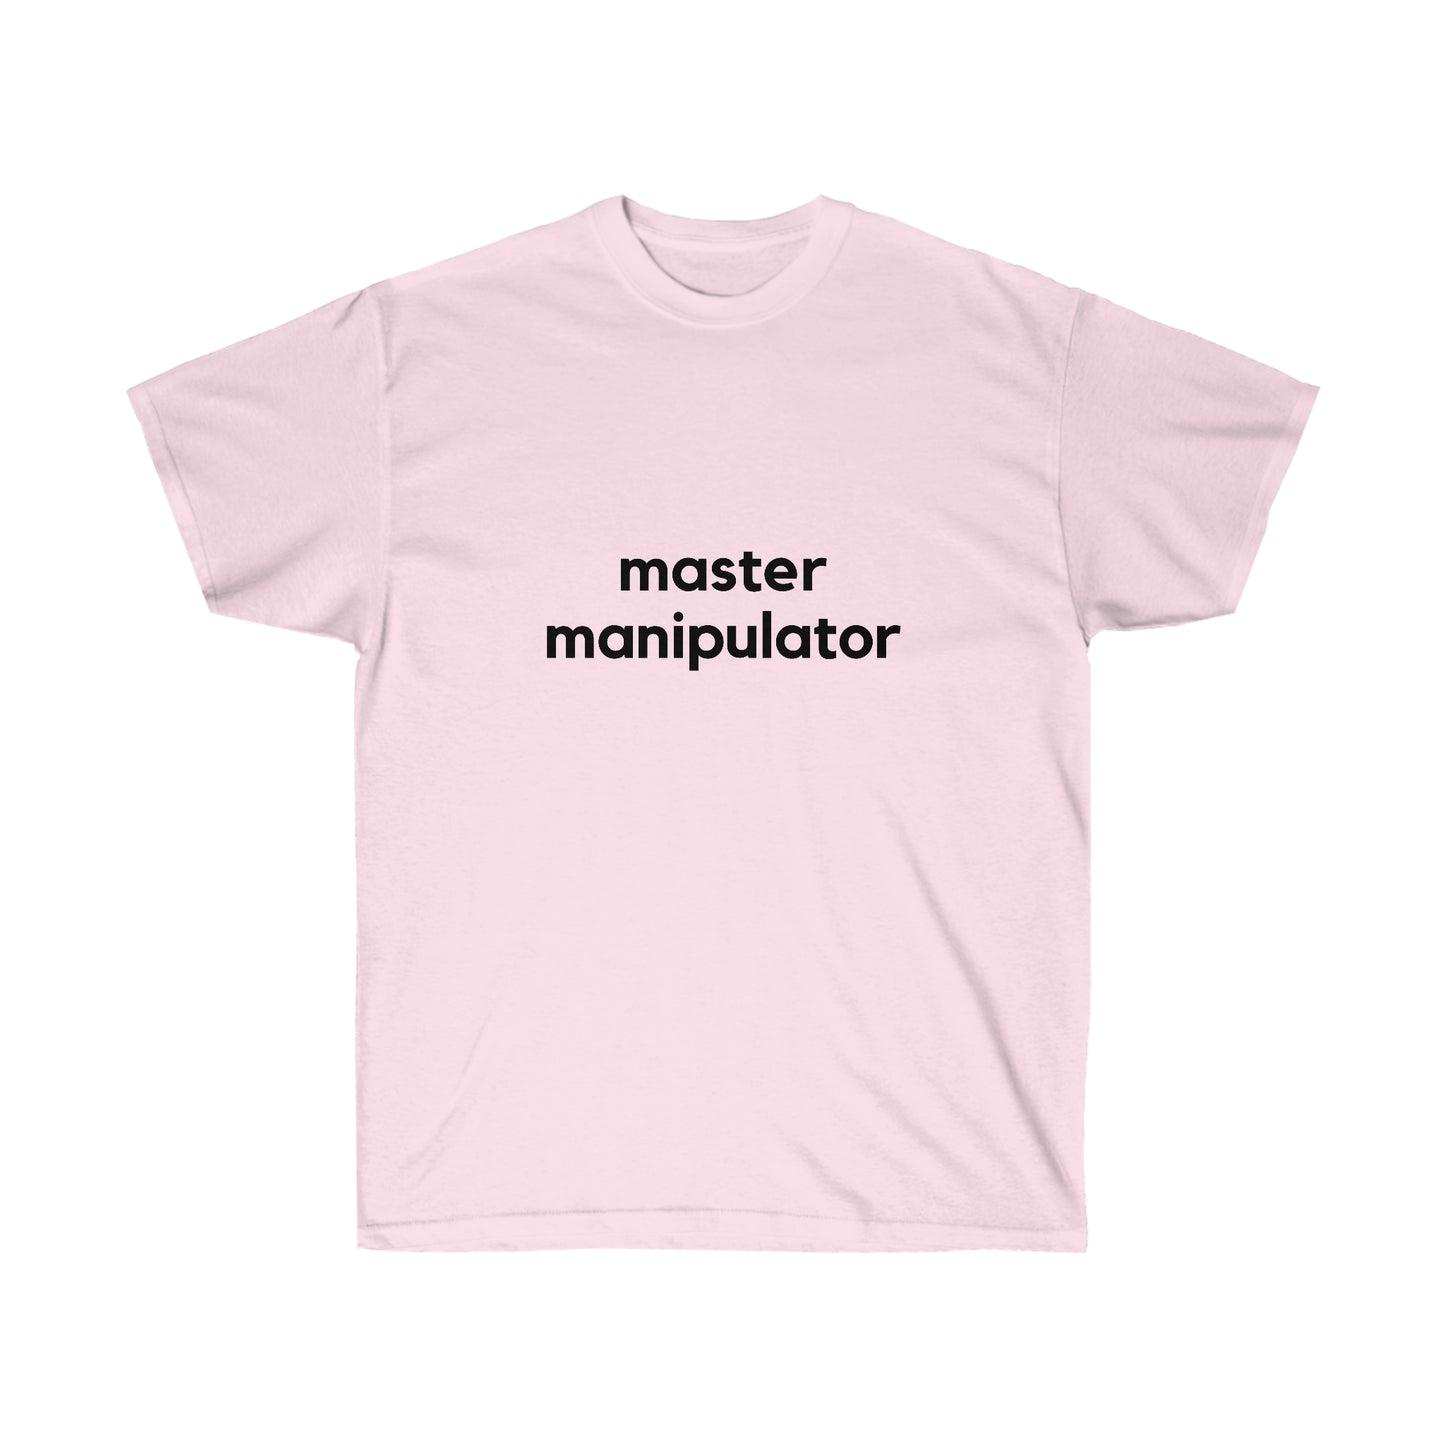 Master manipulator | Couple tee